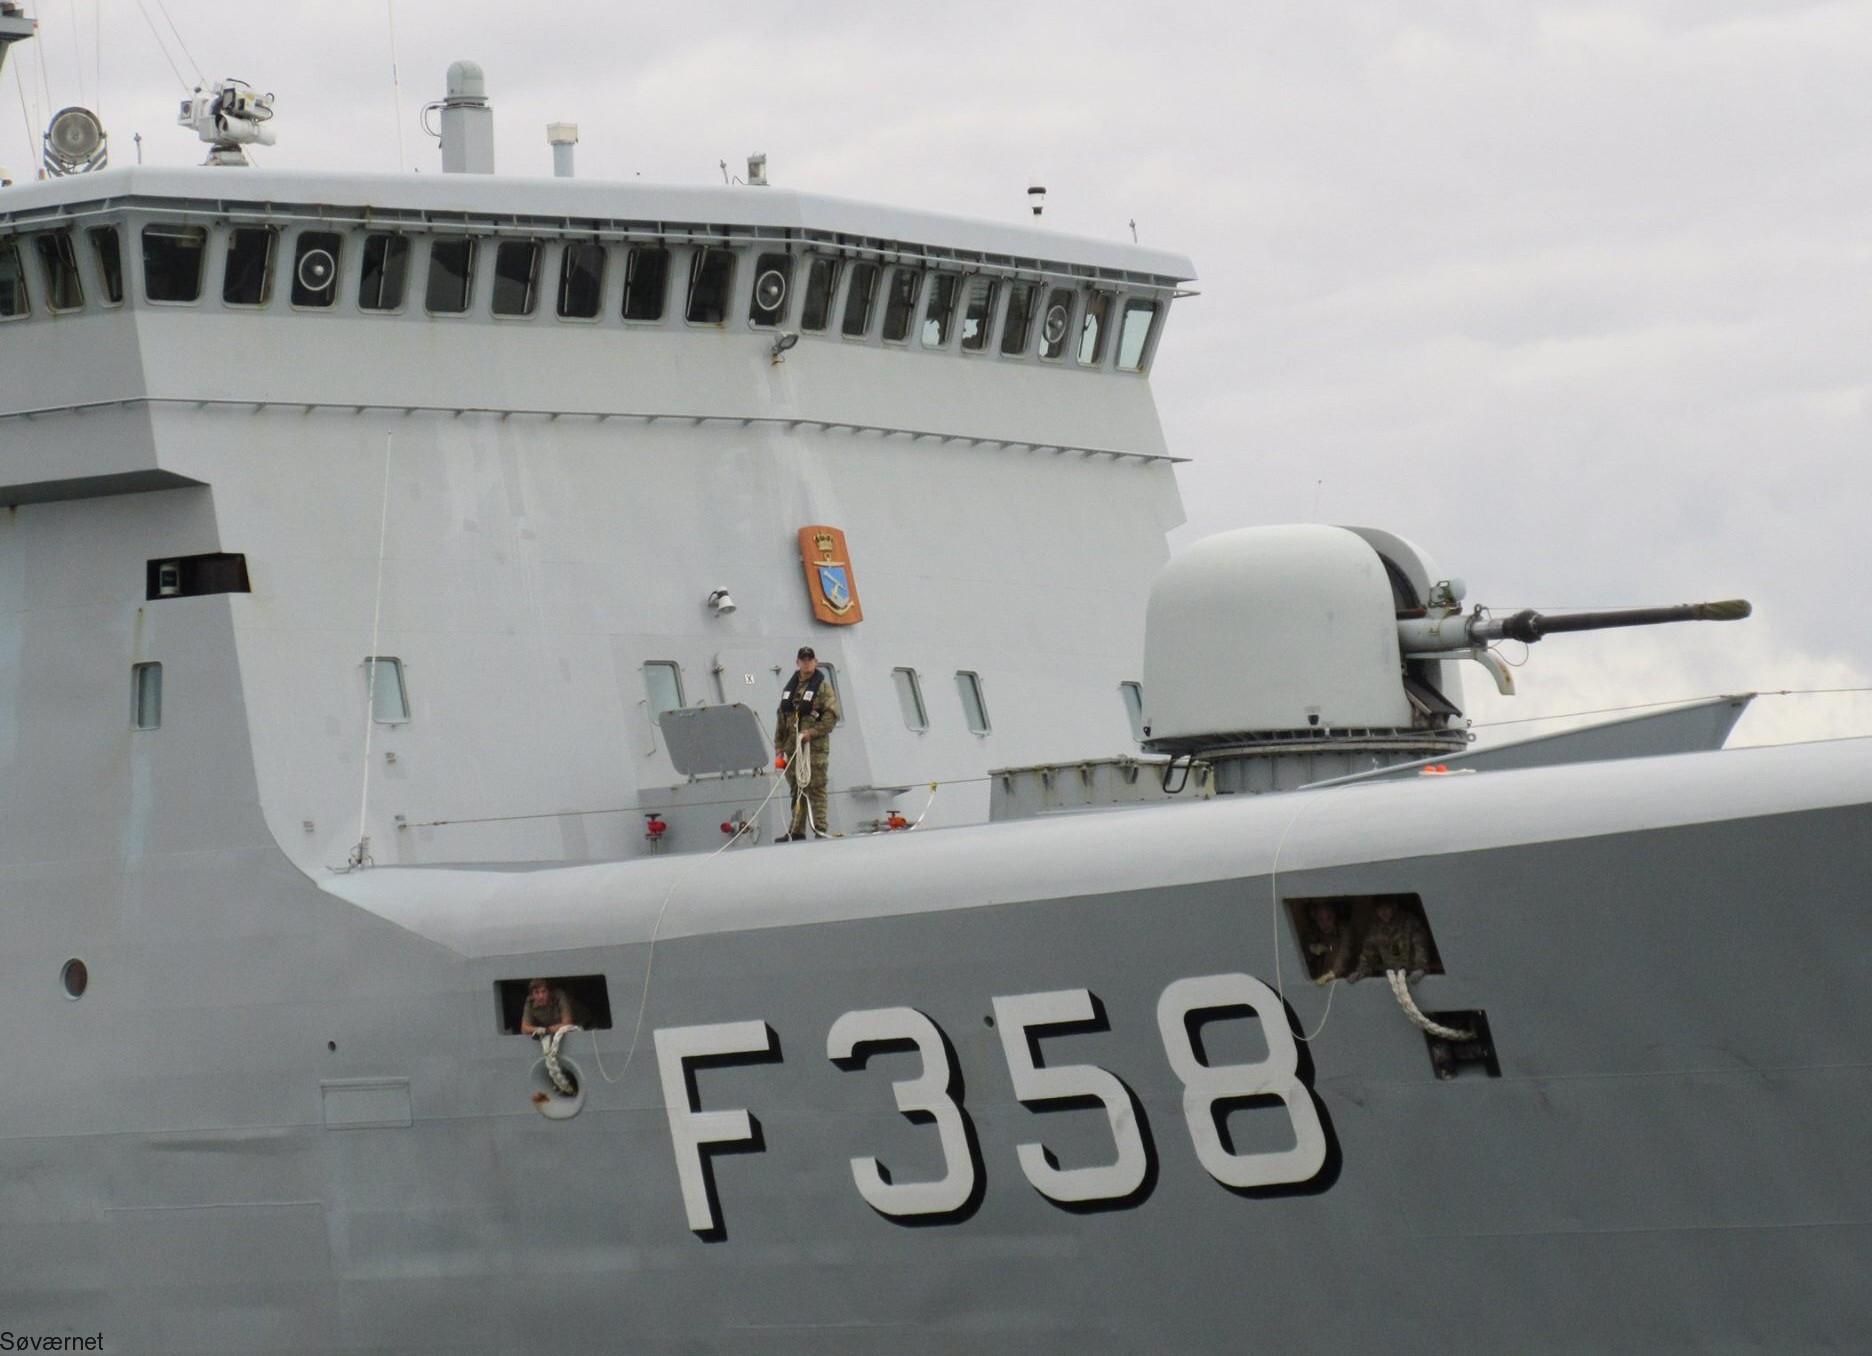 f-358 hdms triton thetis class ocean patrol frigate royal danish navy kongelige danske marine kdm inspektionsskibet 30 oto melara 76/62 gun